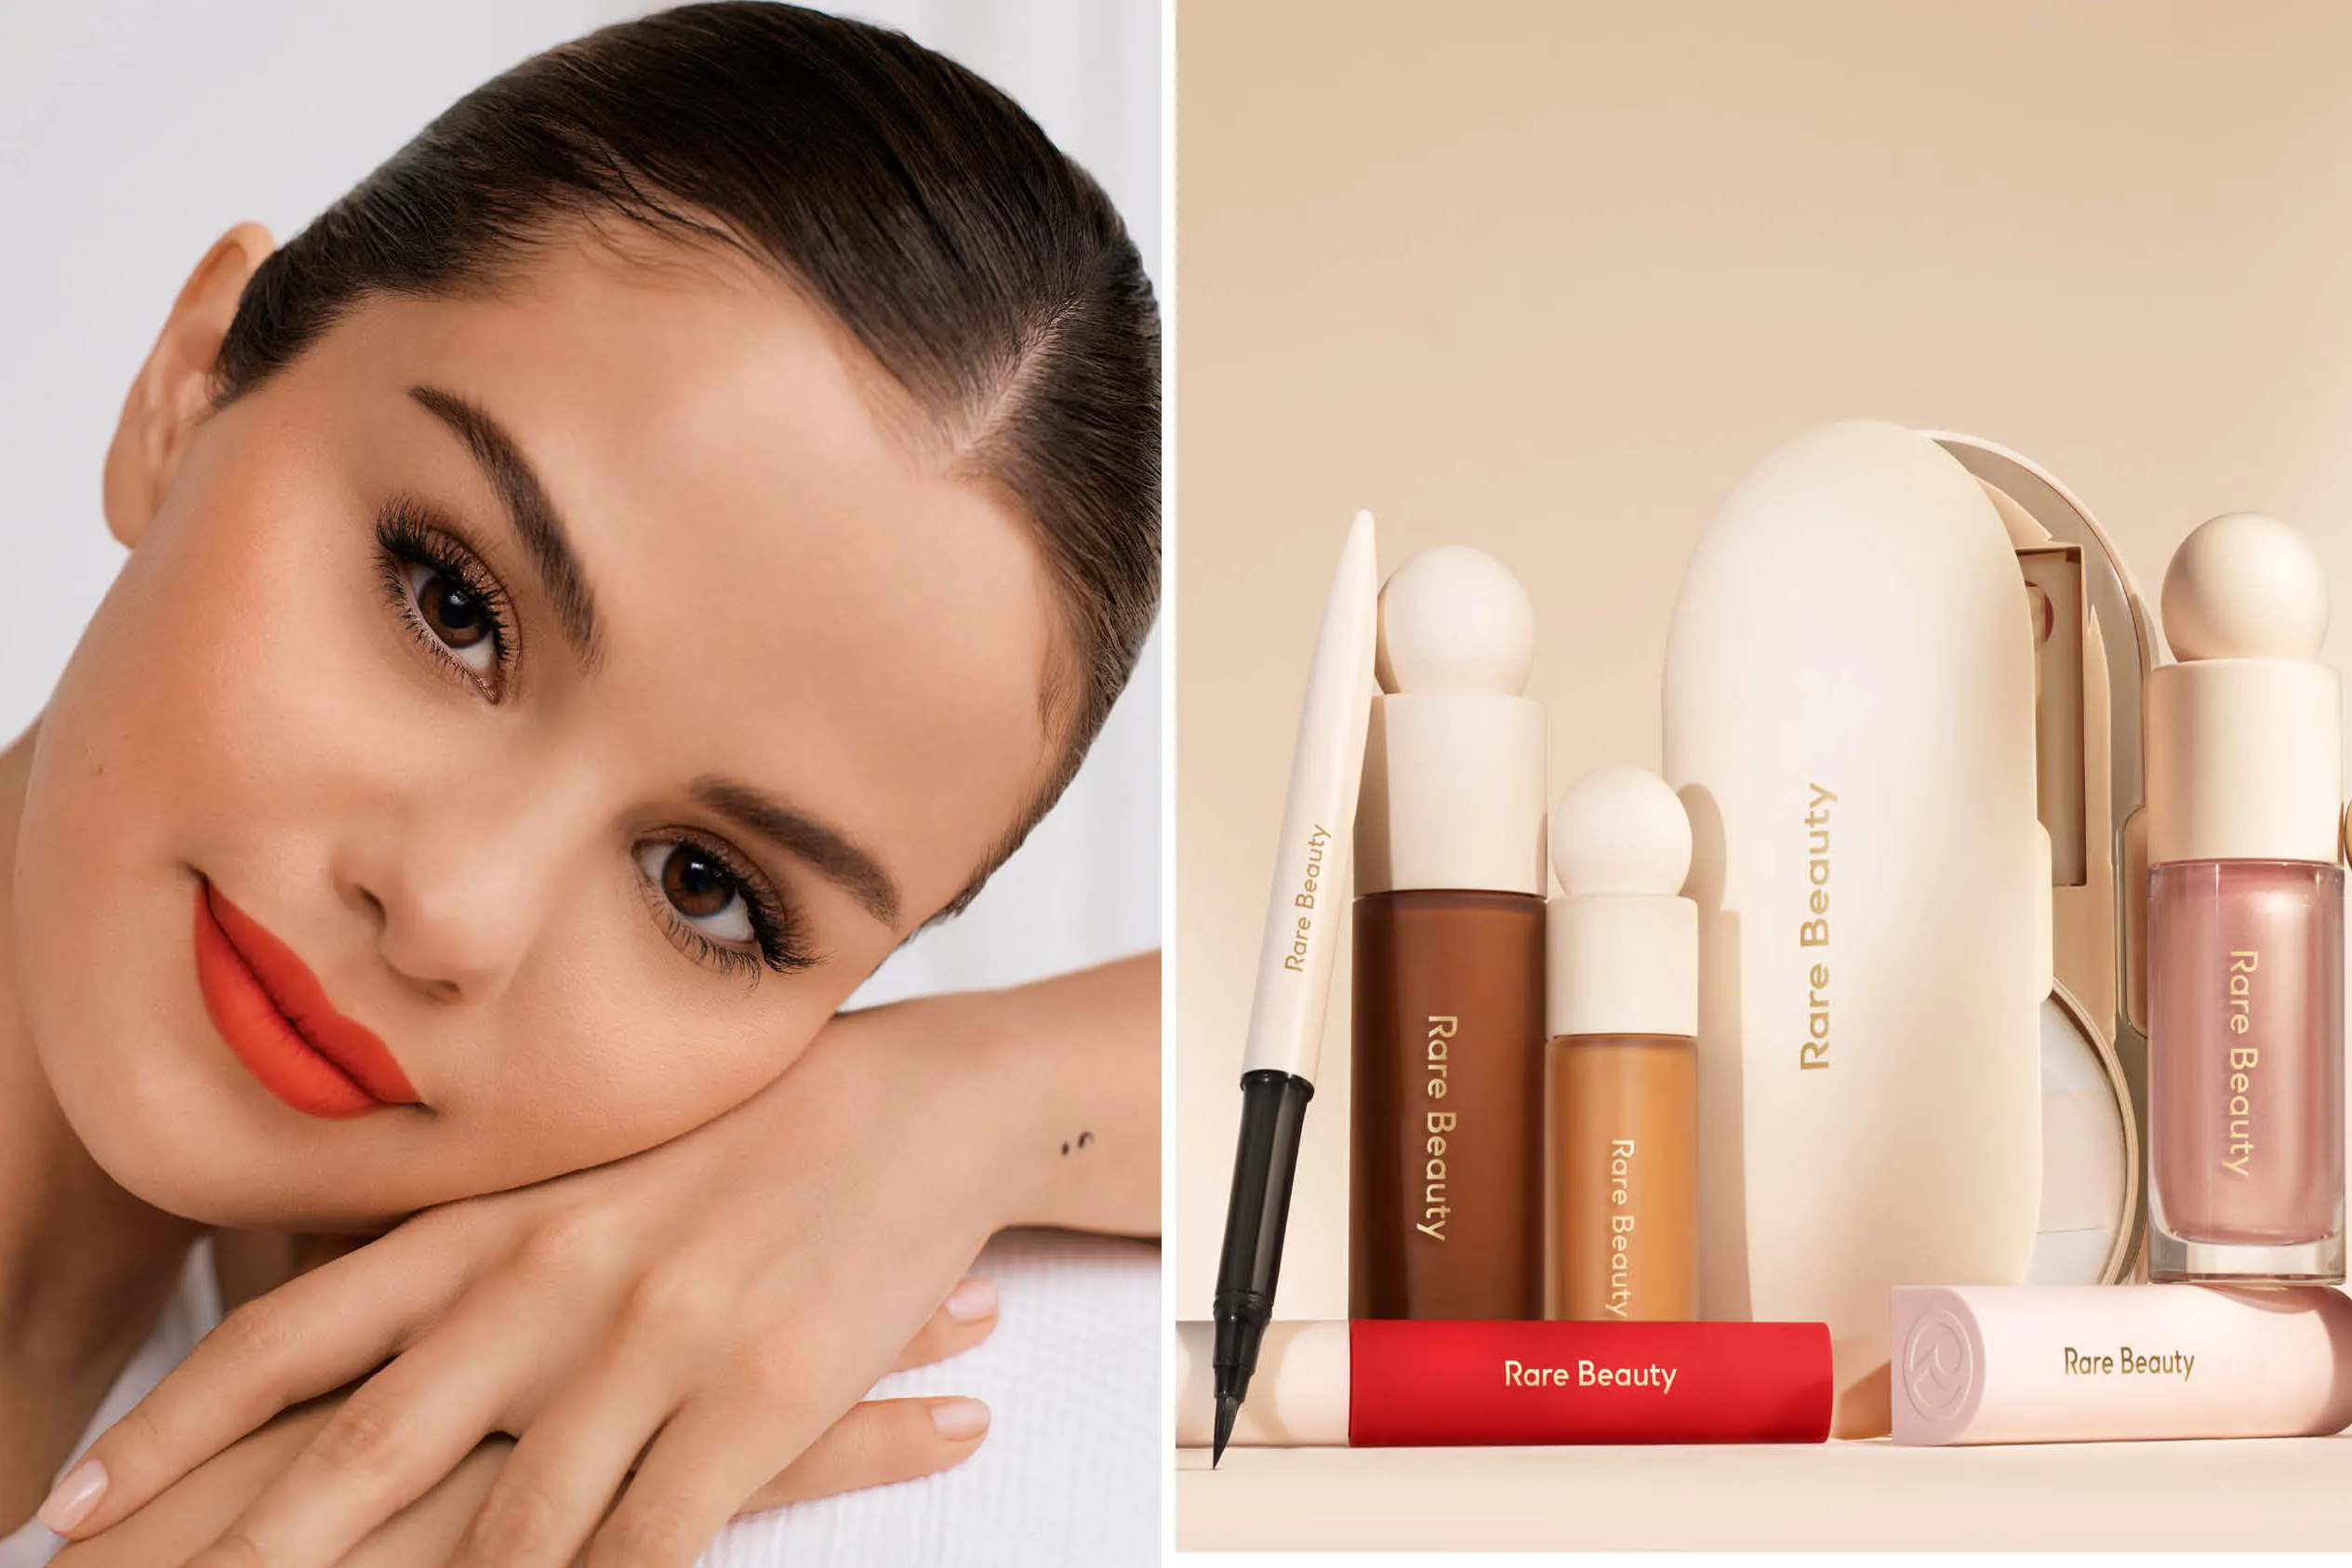 10 Best Celebrity Skincare and Makeup Brands